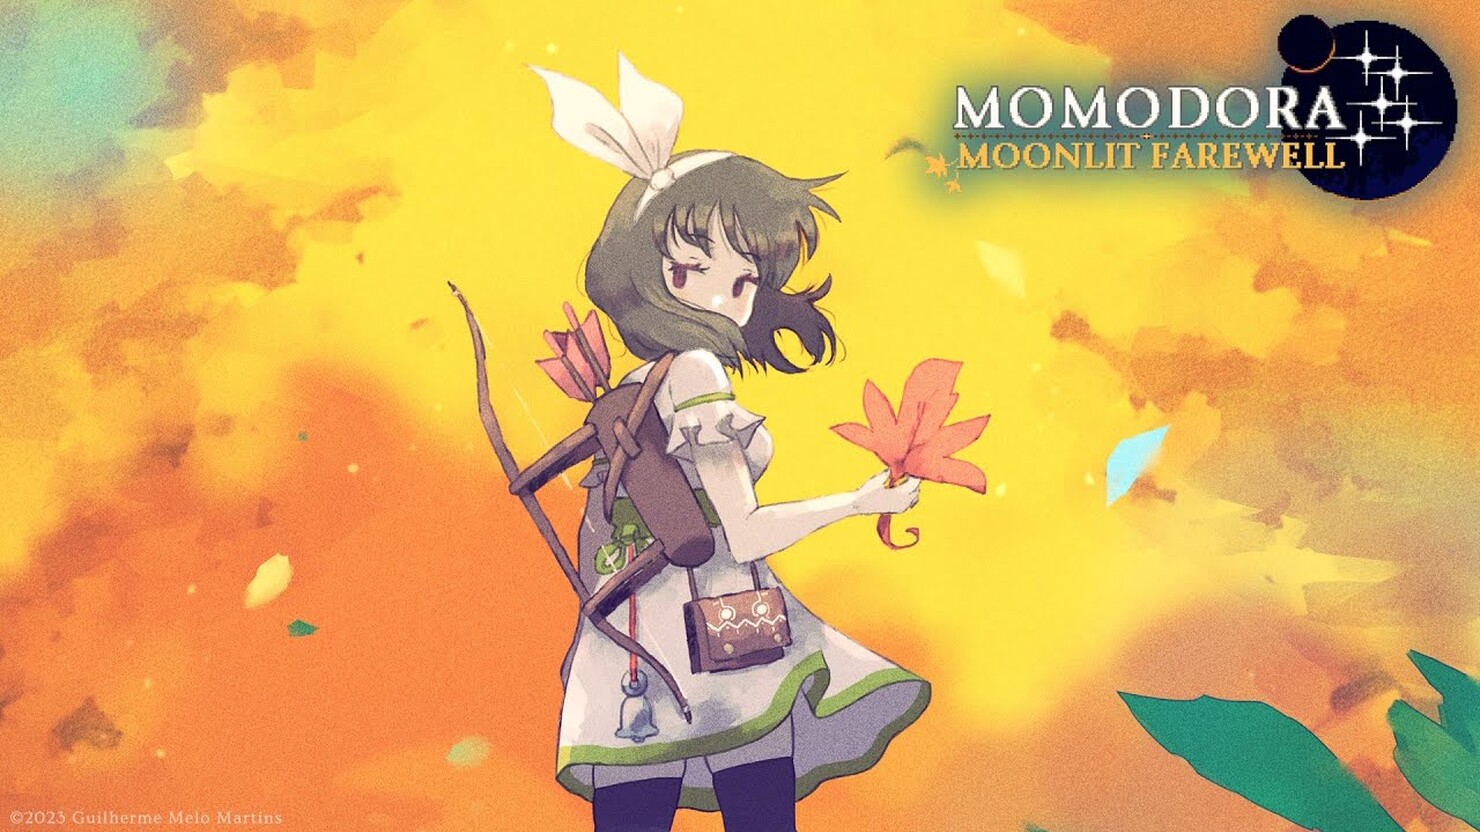 Momodora: Moonlit Farewell #7 (Находим рубеж демонов)